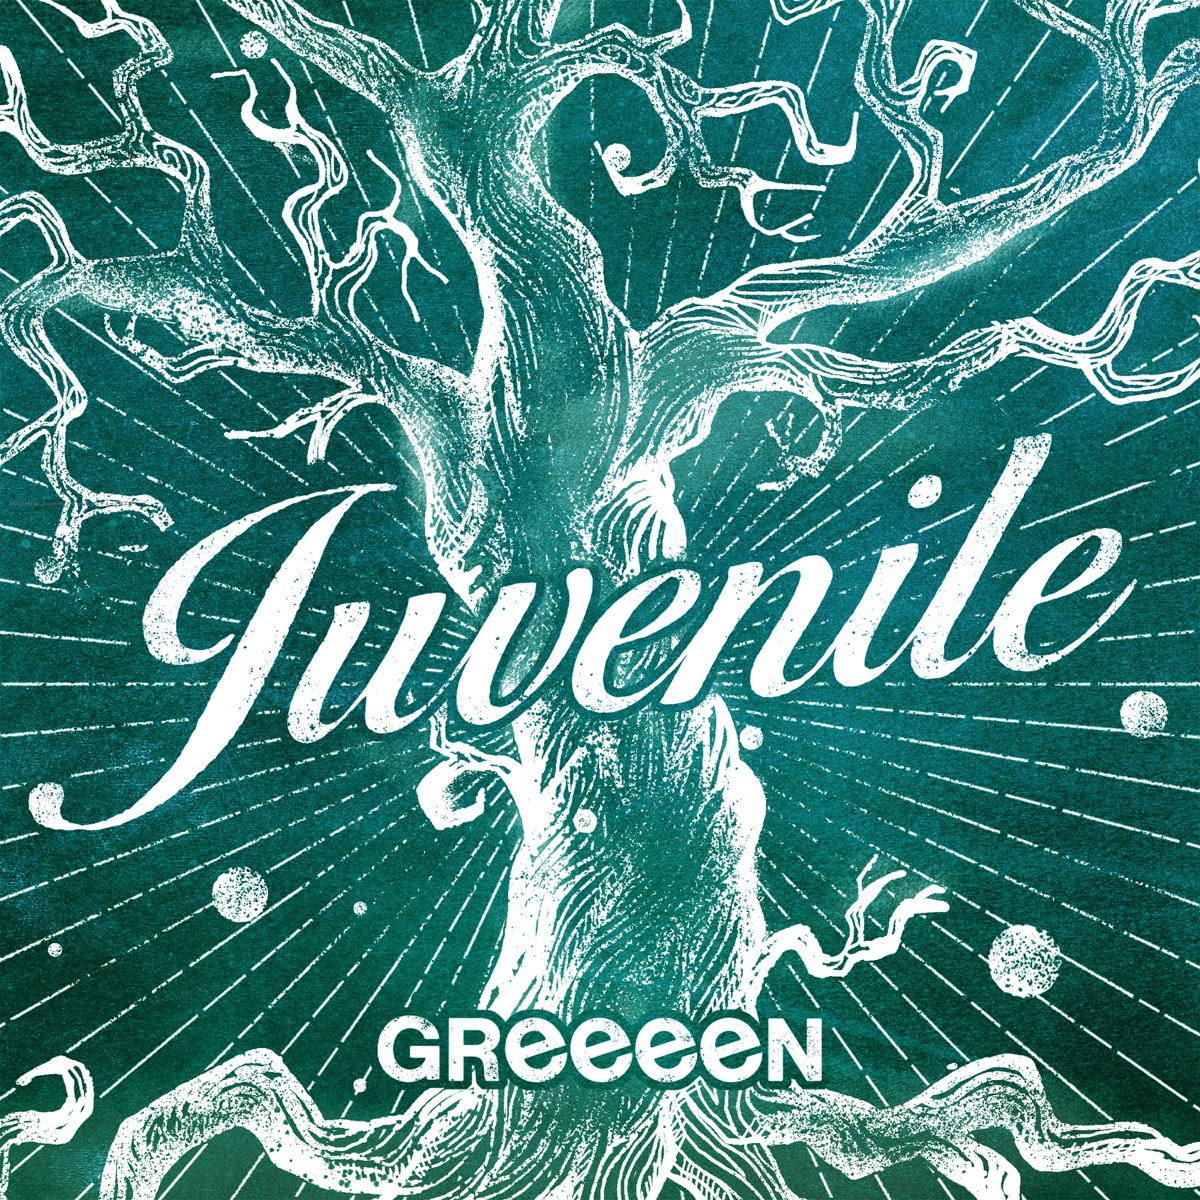 『GReeeeN - ジュブナイル』収録の『ジュブナイル』ジャケット